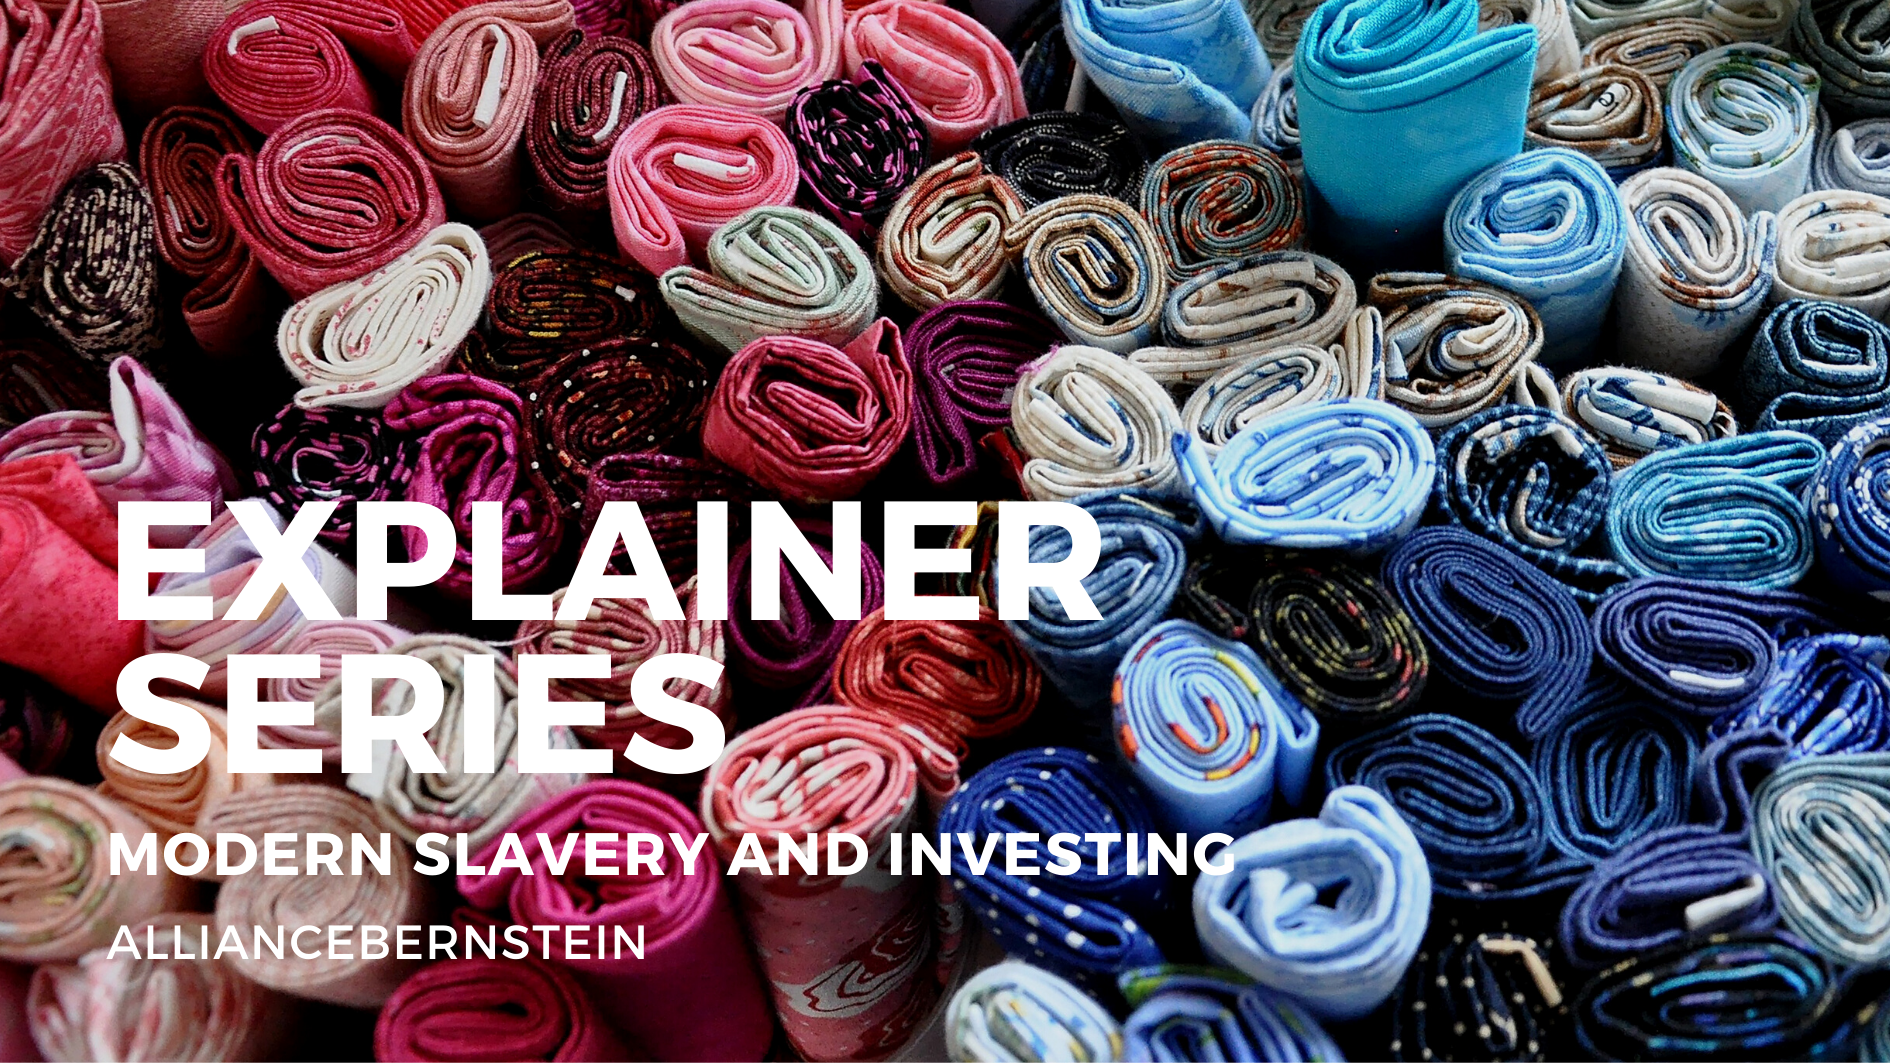 article/AllianceBernstein/Modern_slavery_and_investing_rFtI7Cn.png